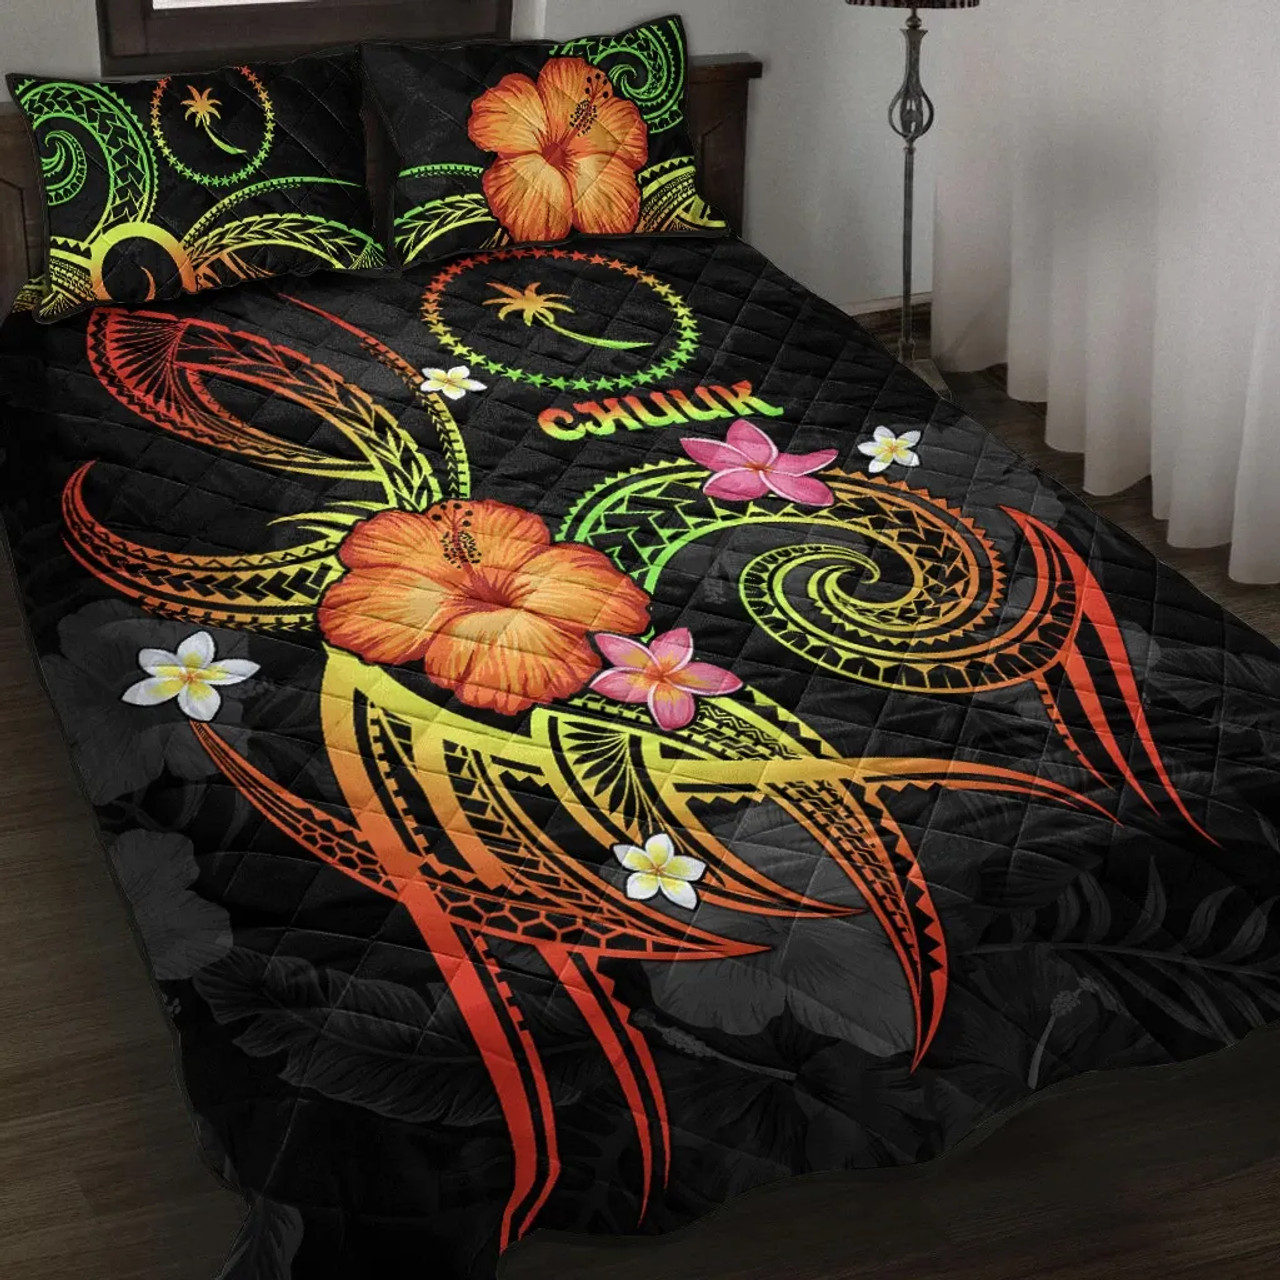 Chuuk Polynesian Quilt Bed Set - Legend of Chuuk (Reggae) 1